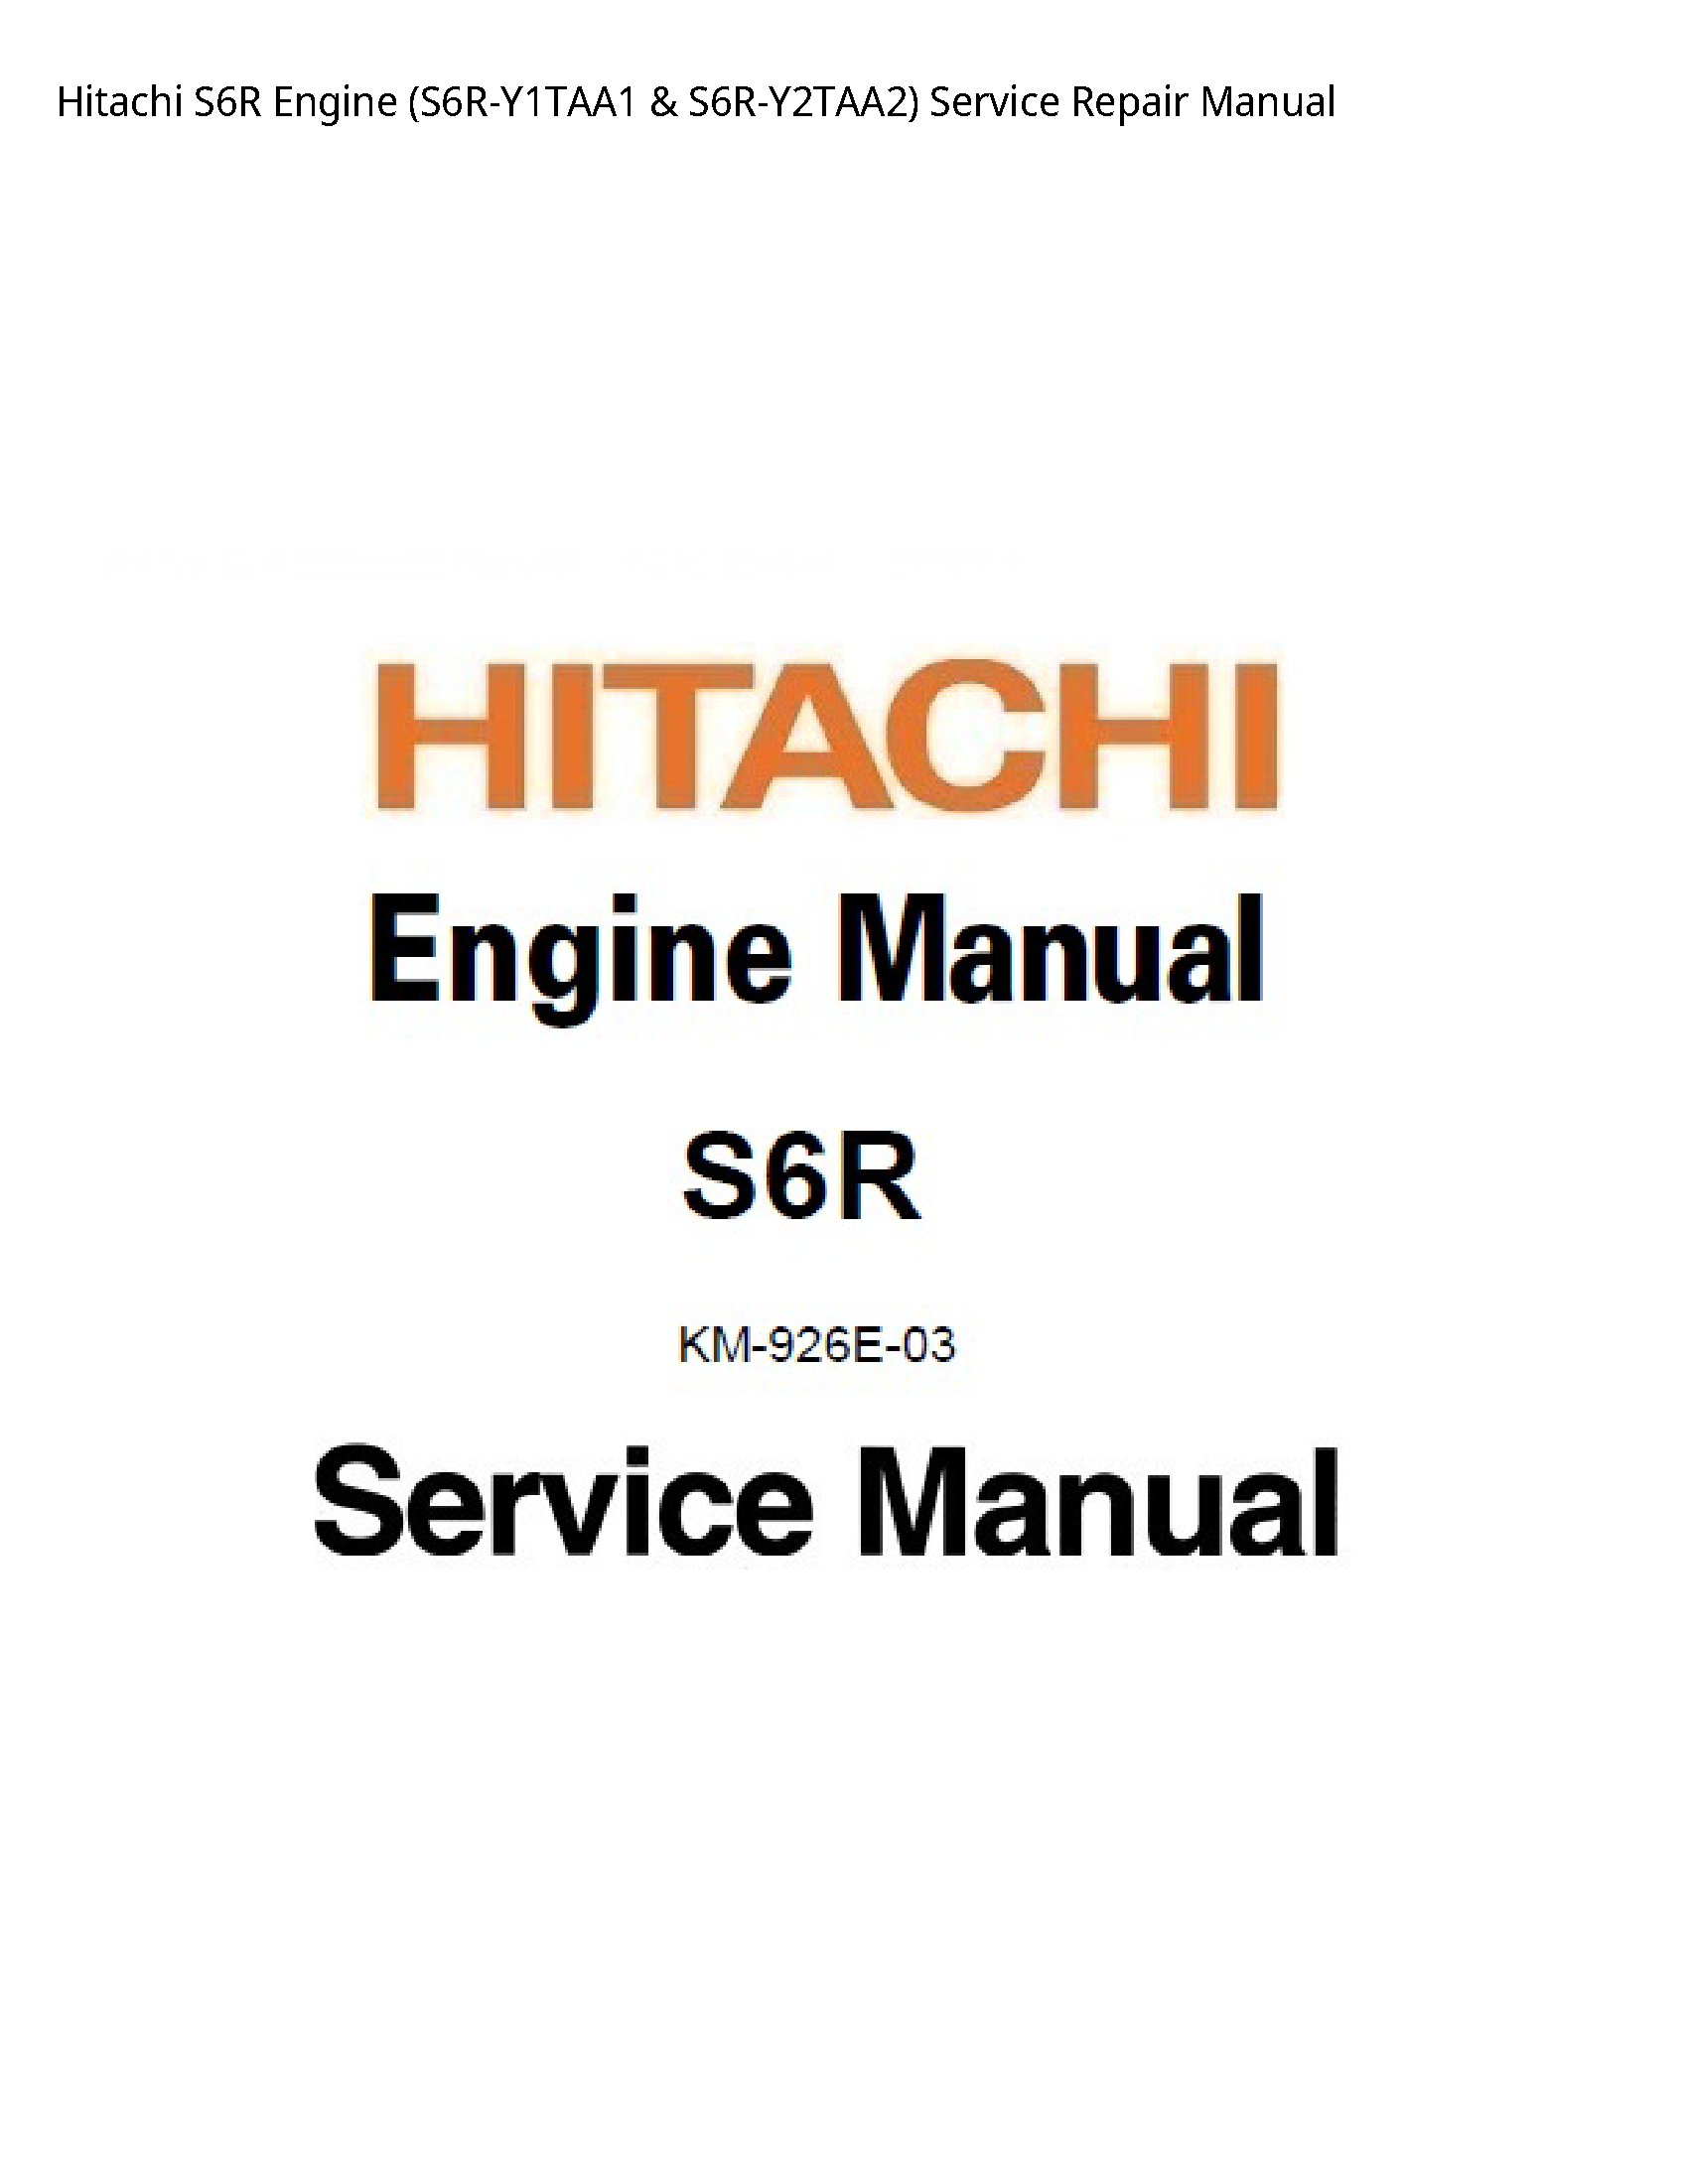 Hitachi S6R Engine manual